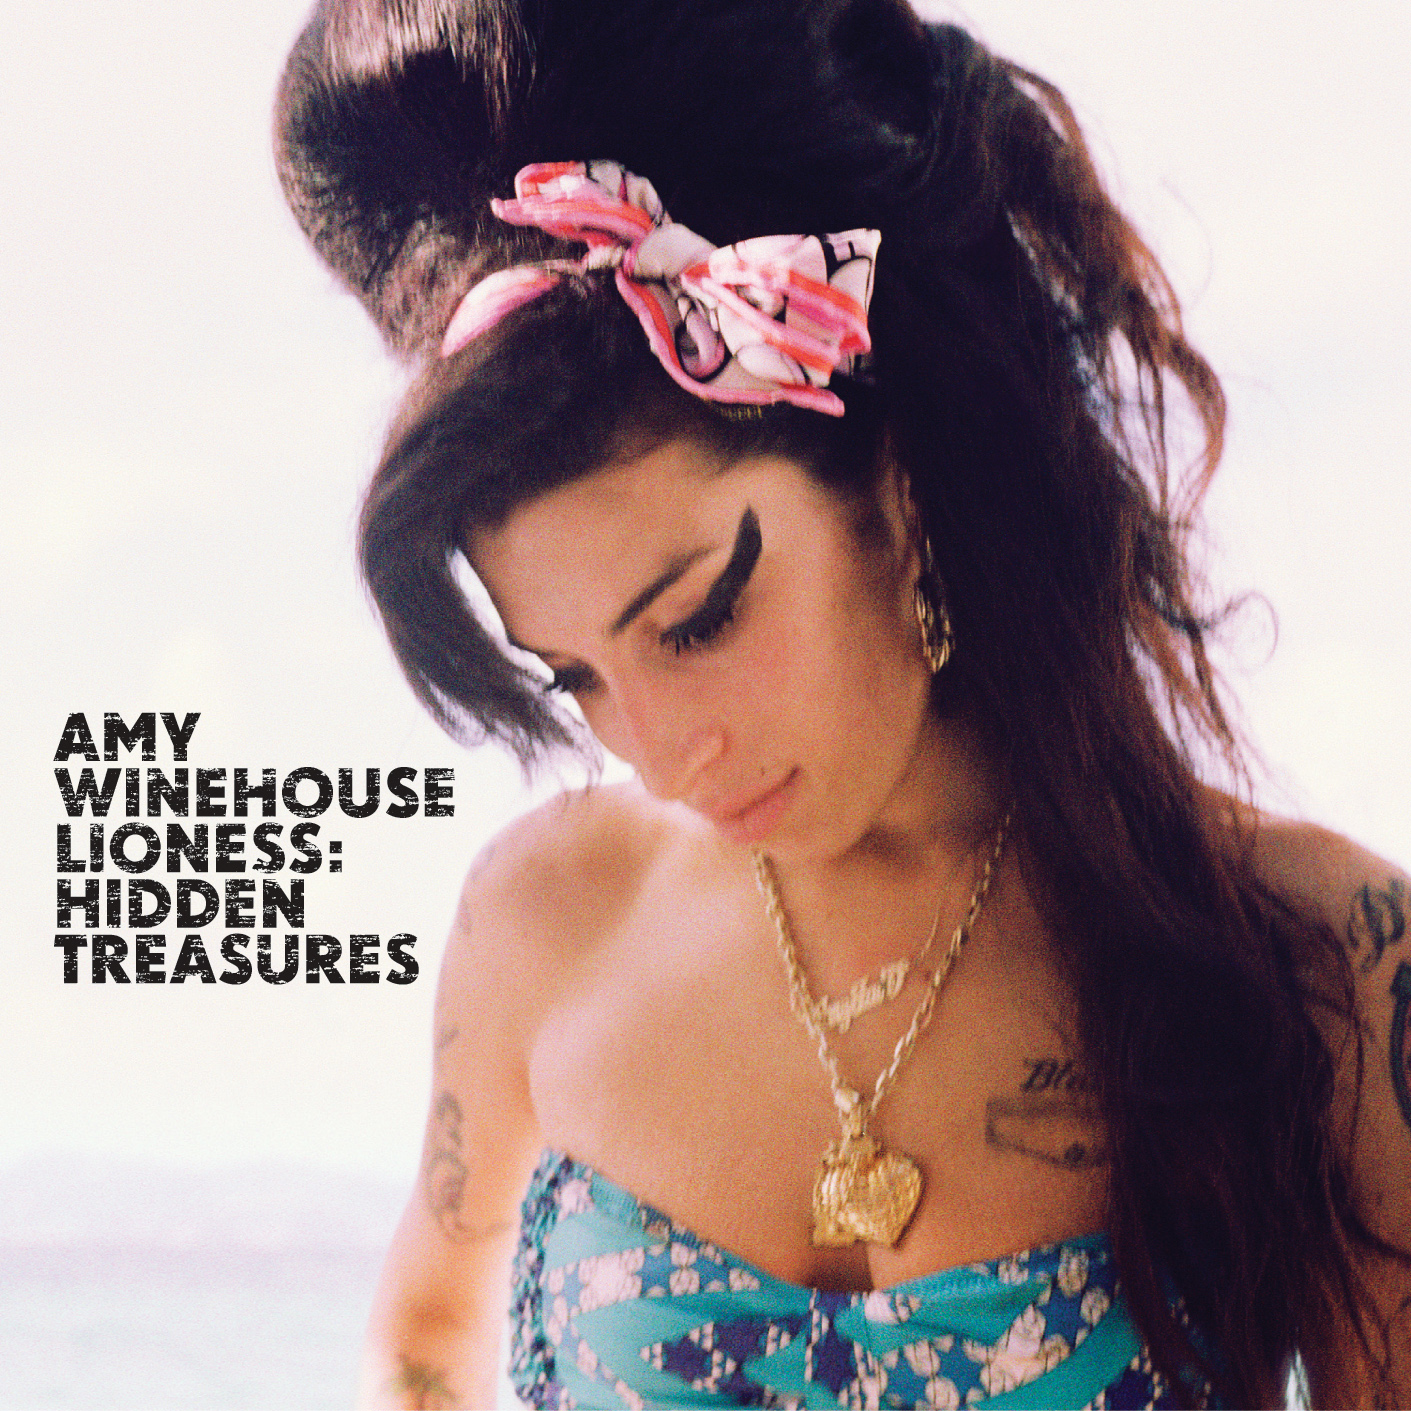 http://1.bp.blogspot.com/-FkmSFlqb-90/TuoG-Gzg8sI/AAAAAAAAA8k/13wwWx6fG4k/s1600/Amy+Winehouse+-+Lioness+Hidden+Treasures.jpg